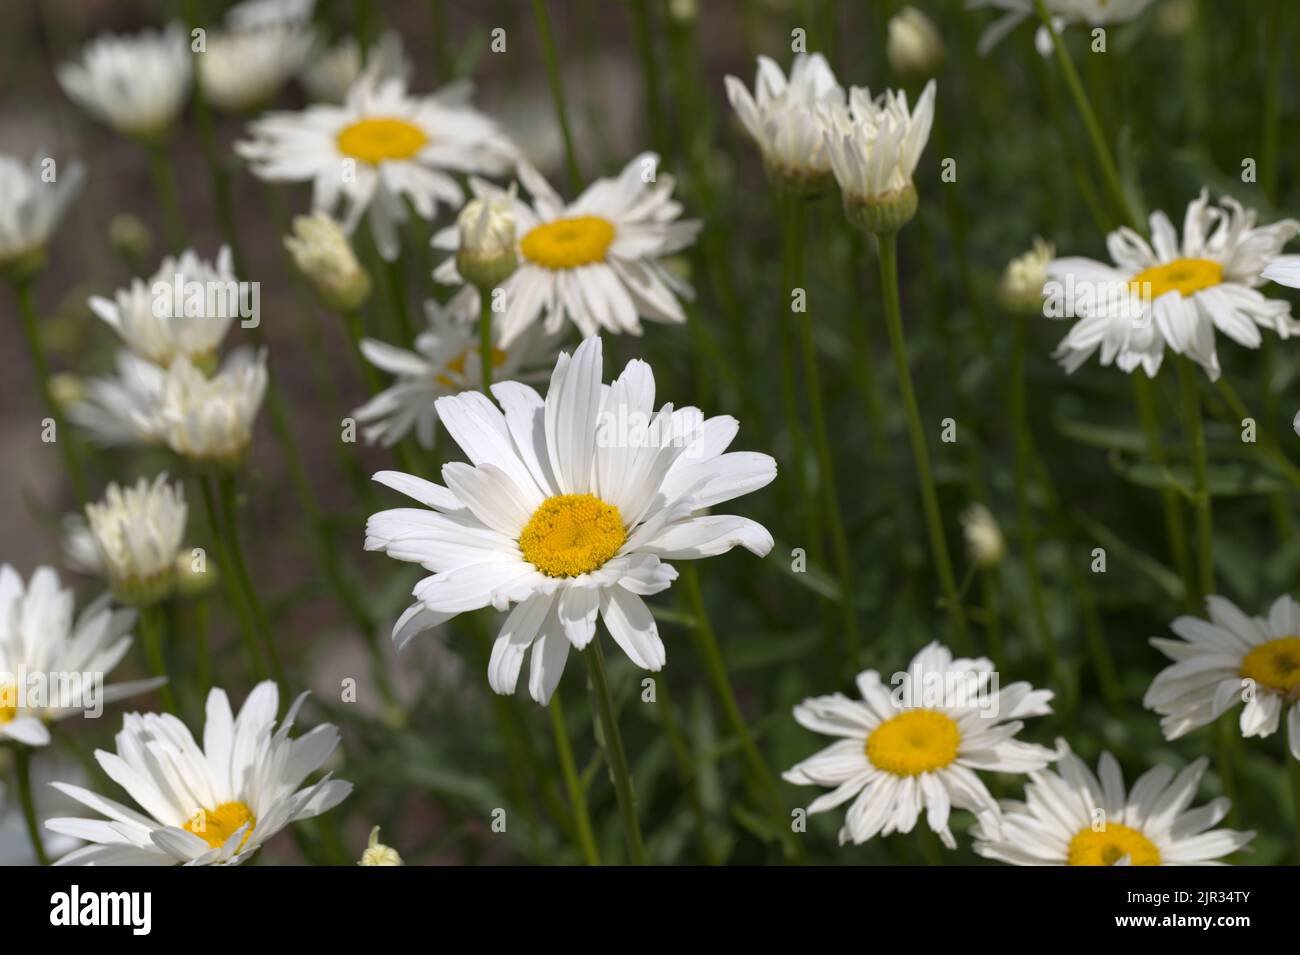 Flowering daisies in a garden Stock Photo